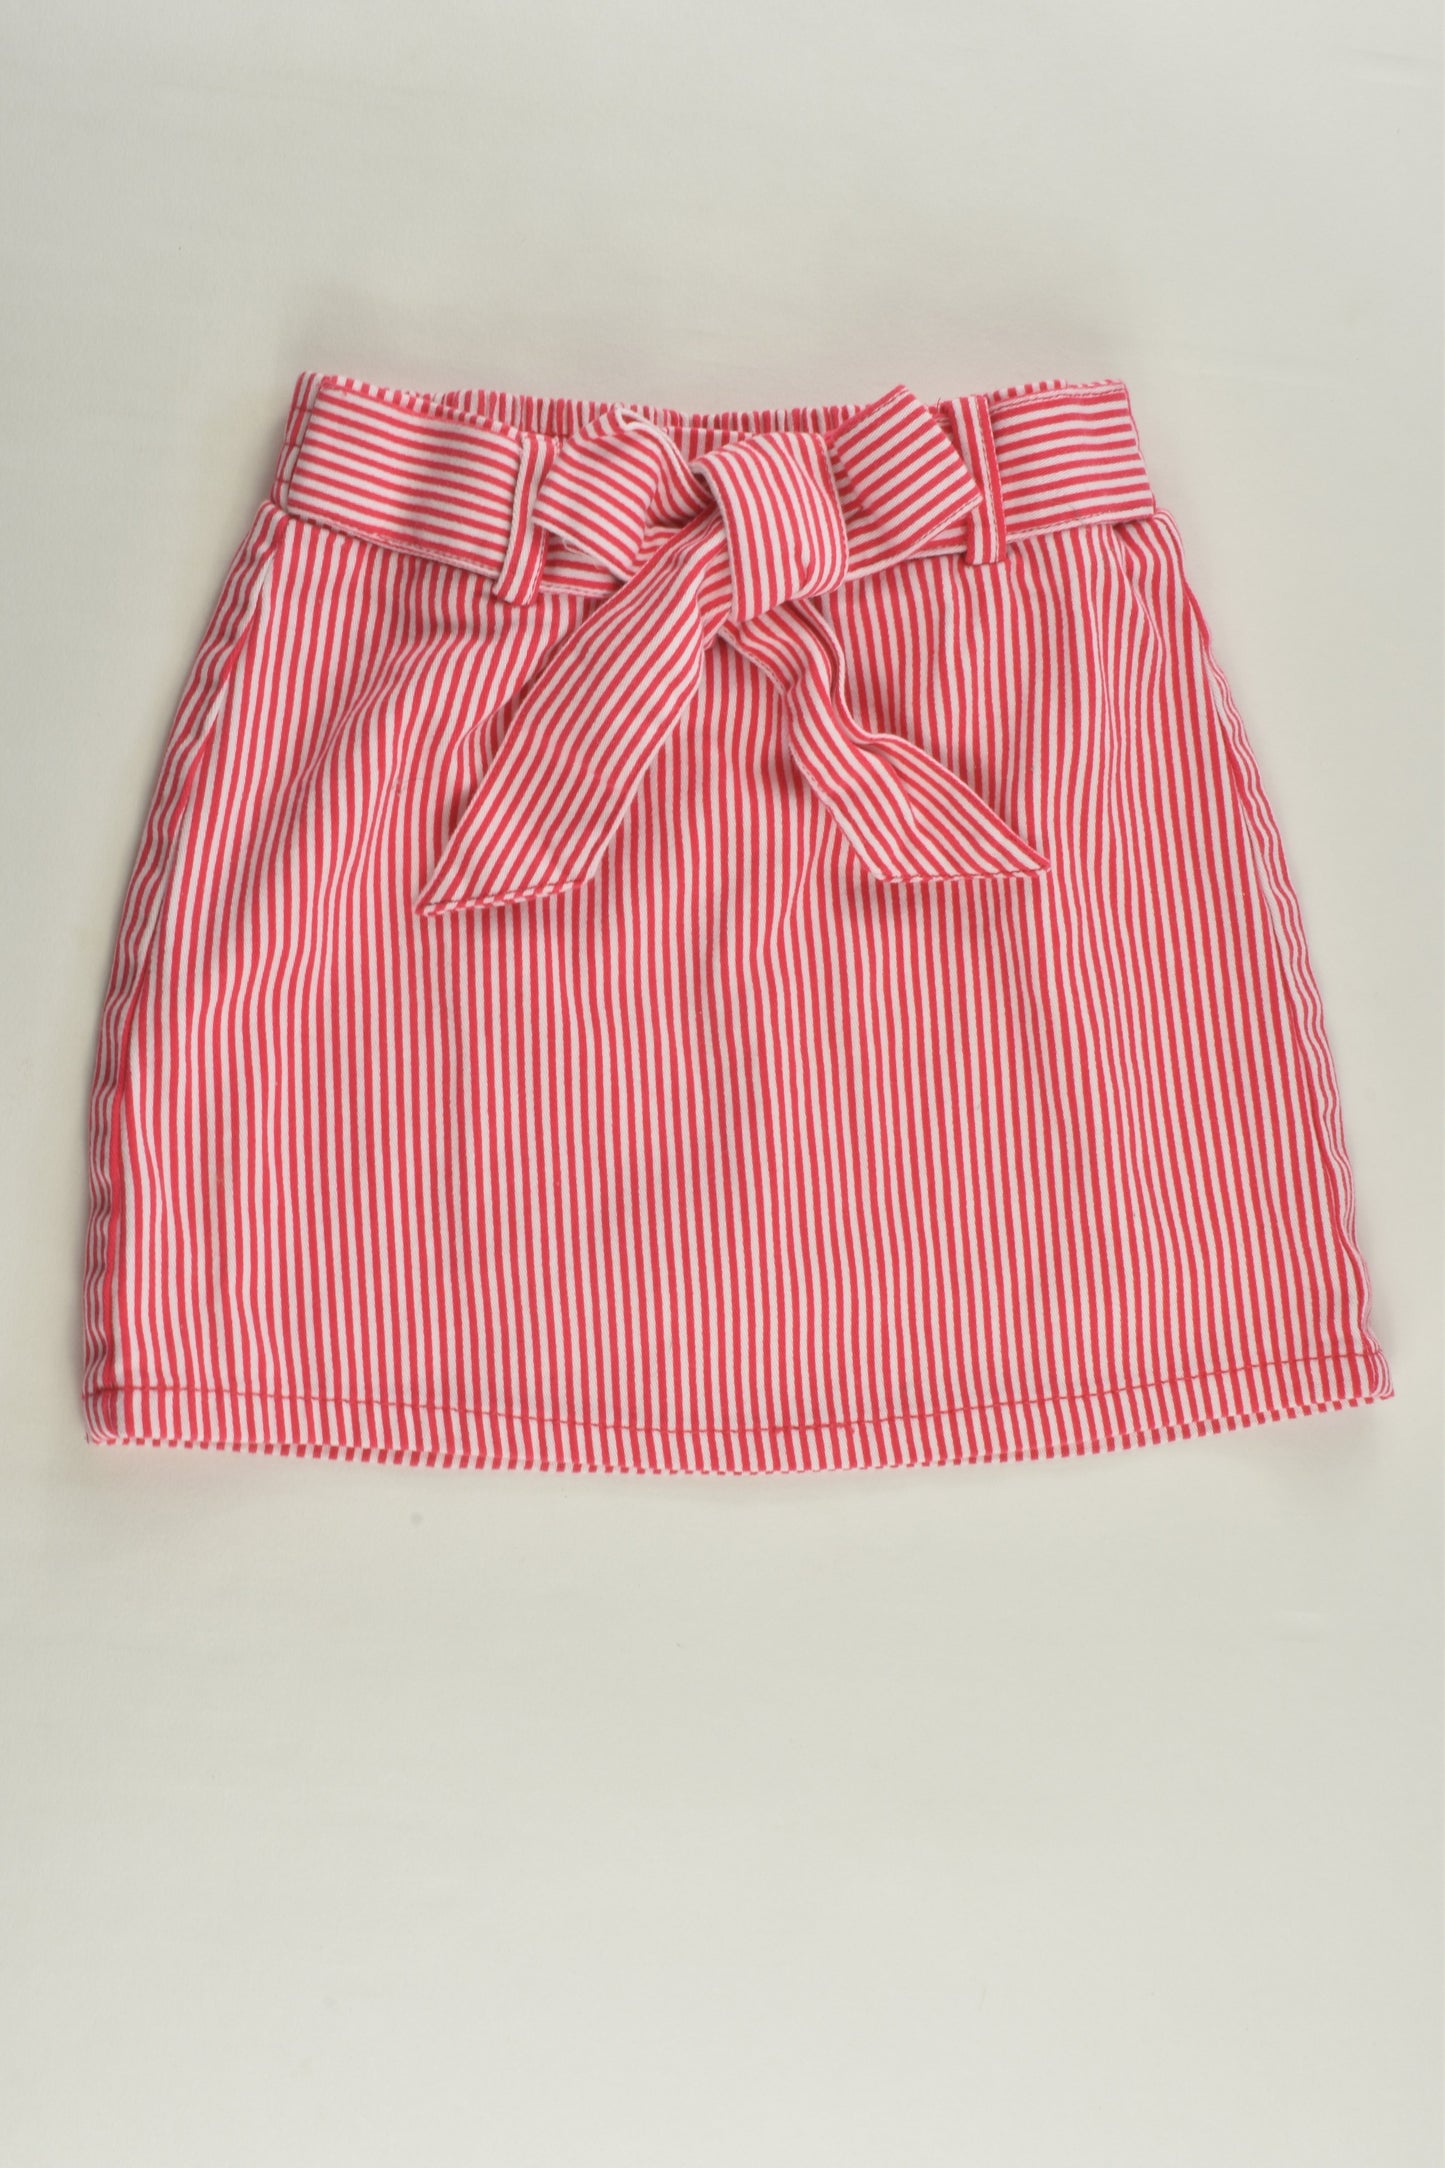 Kids & Co Size 4 Stretchy Striped Skirt